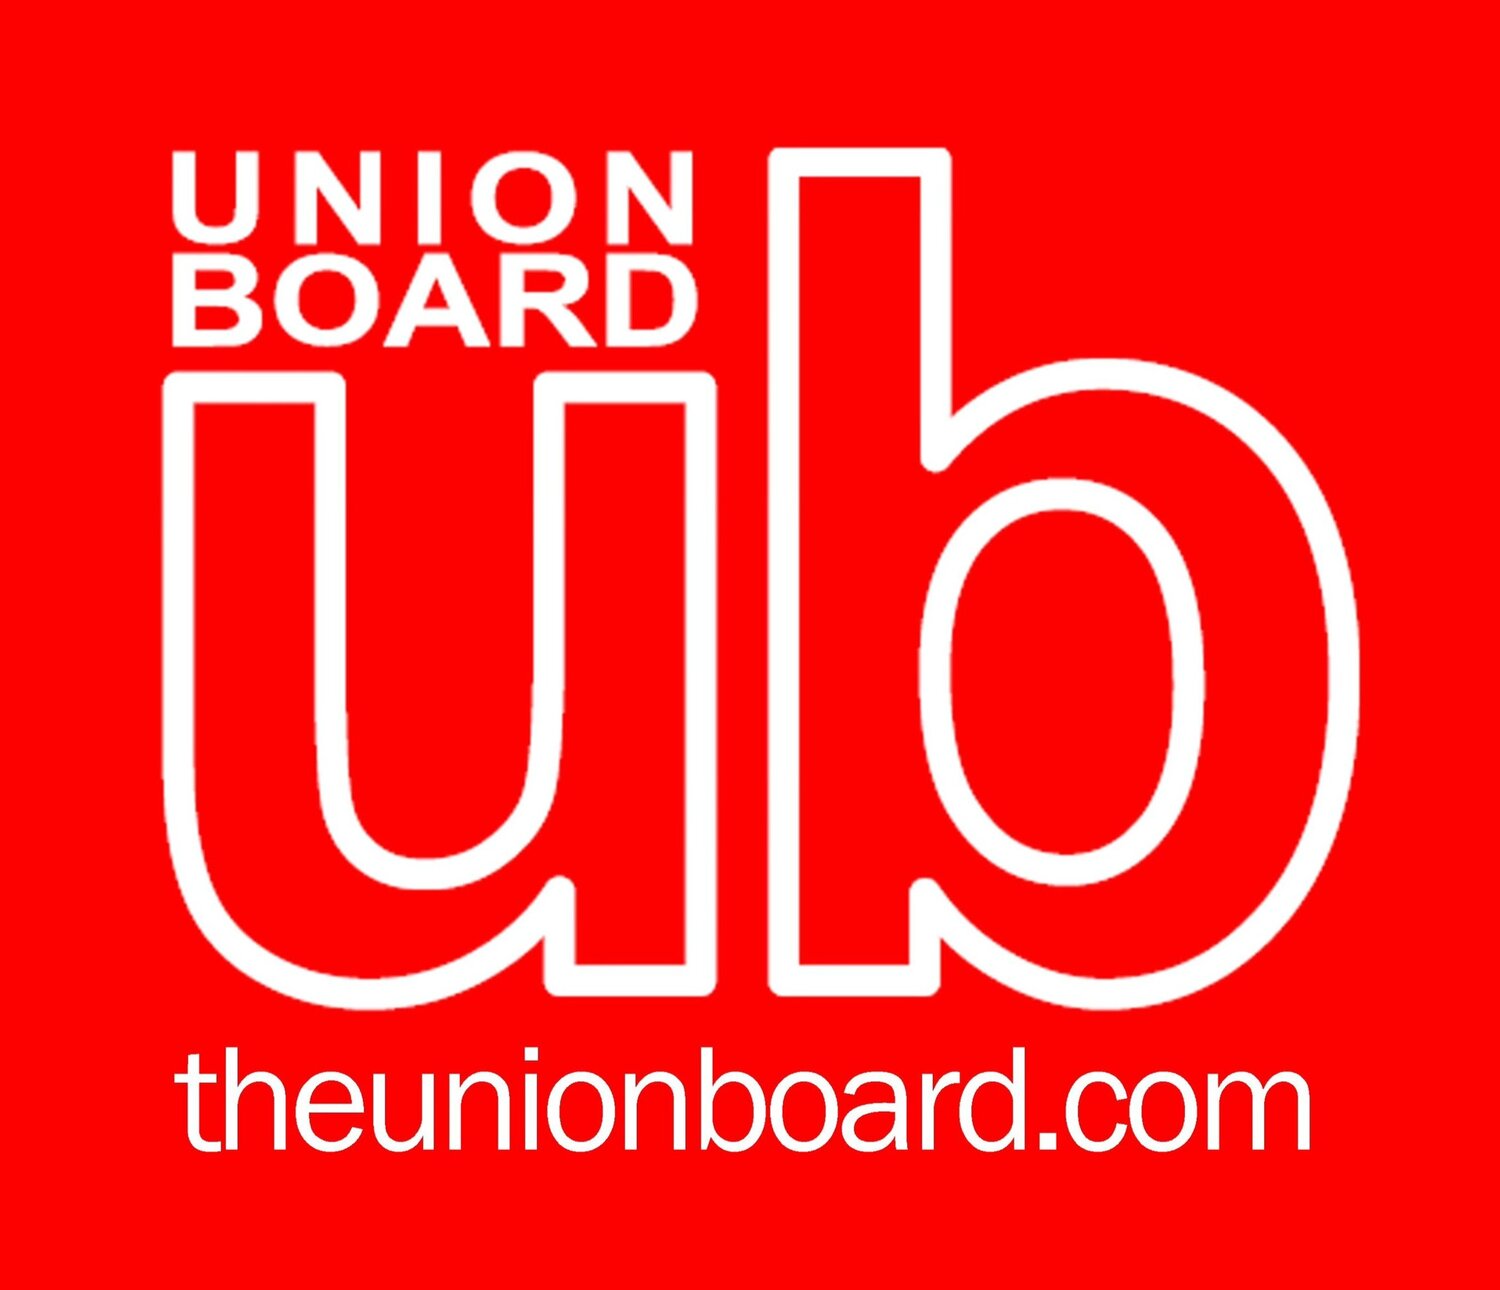 Louisiana Tech Union Board